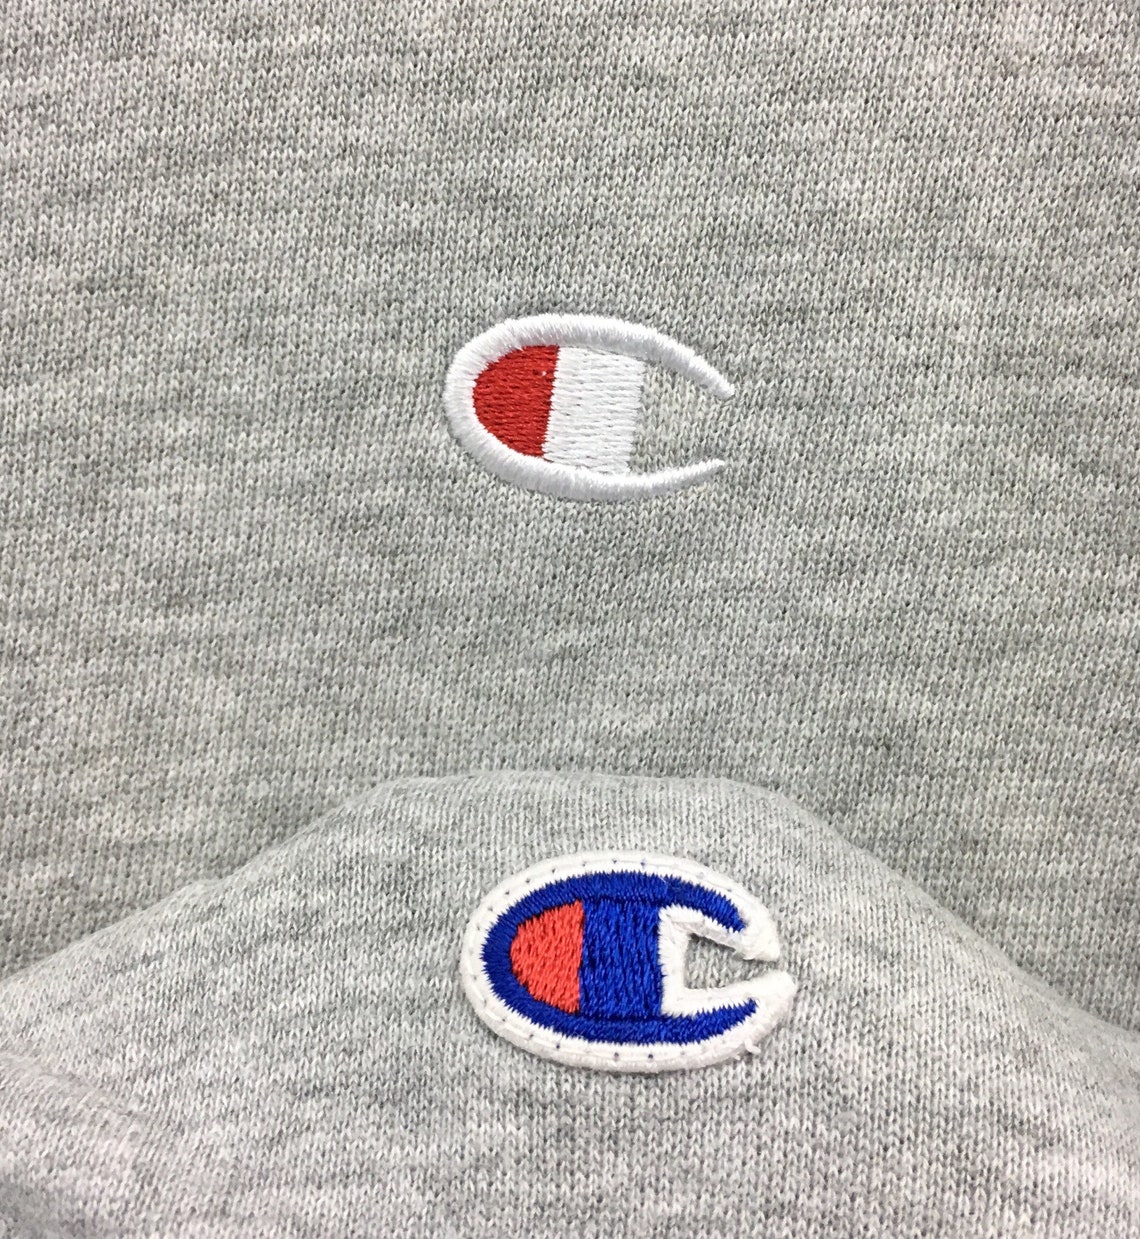 Champion crewneck sweatshirt embroidery small logo pullover / | Etsy